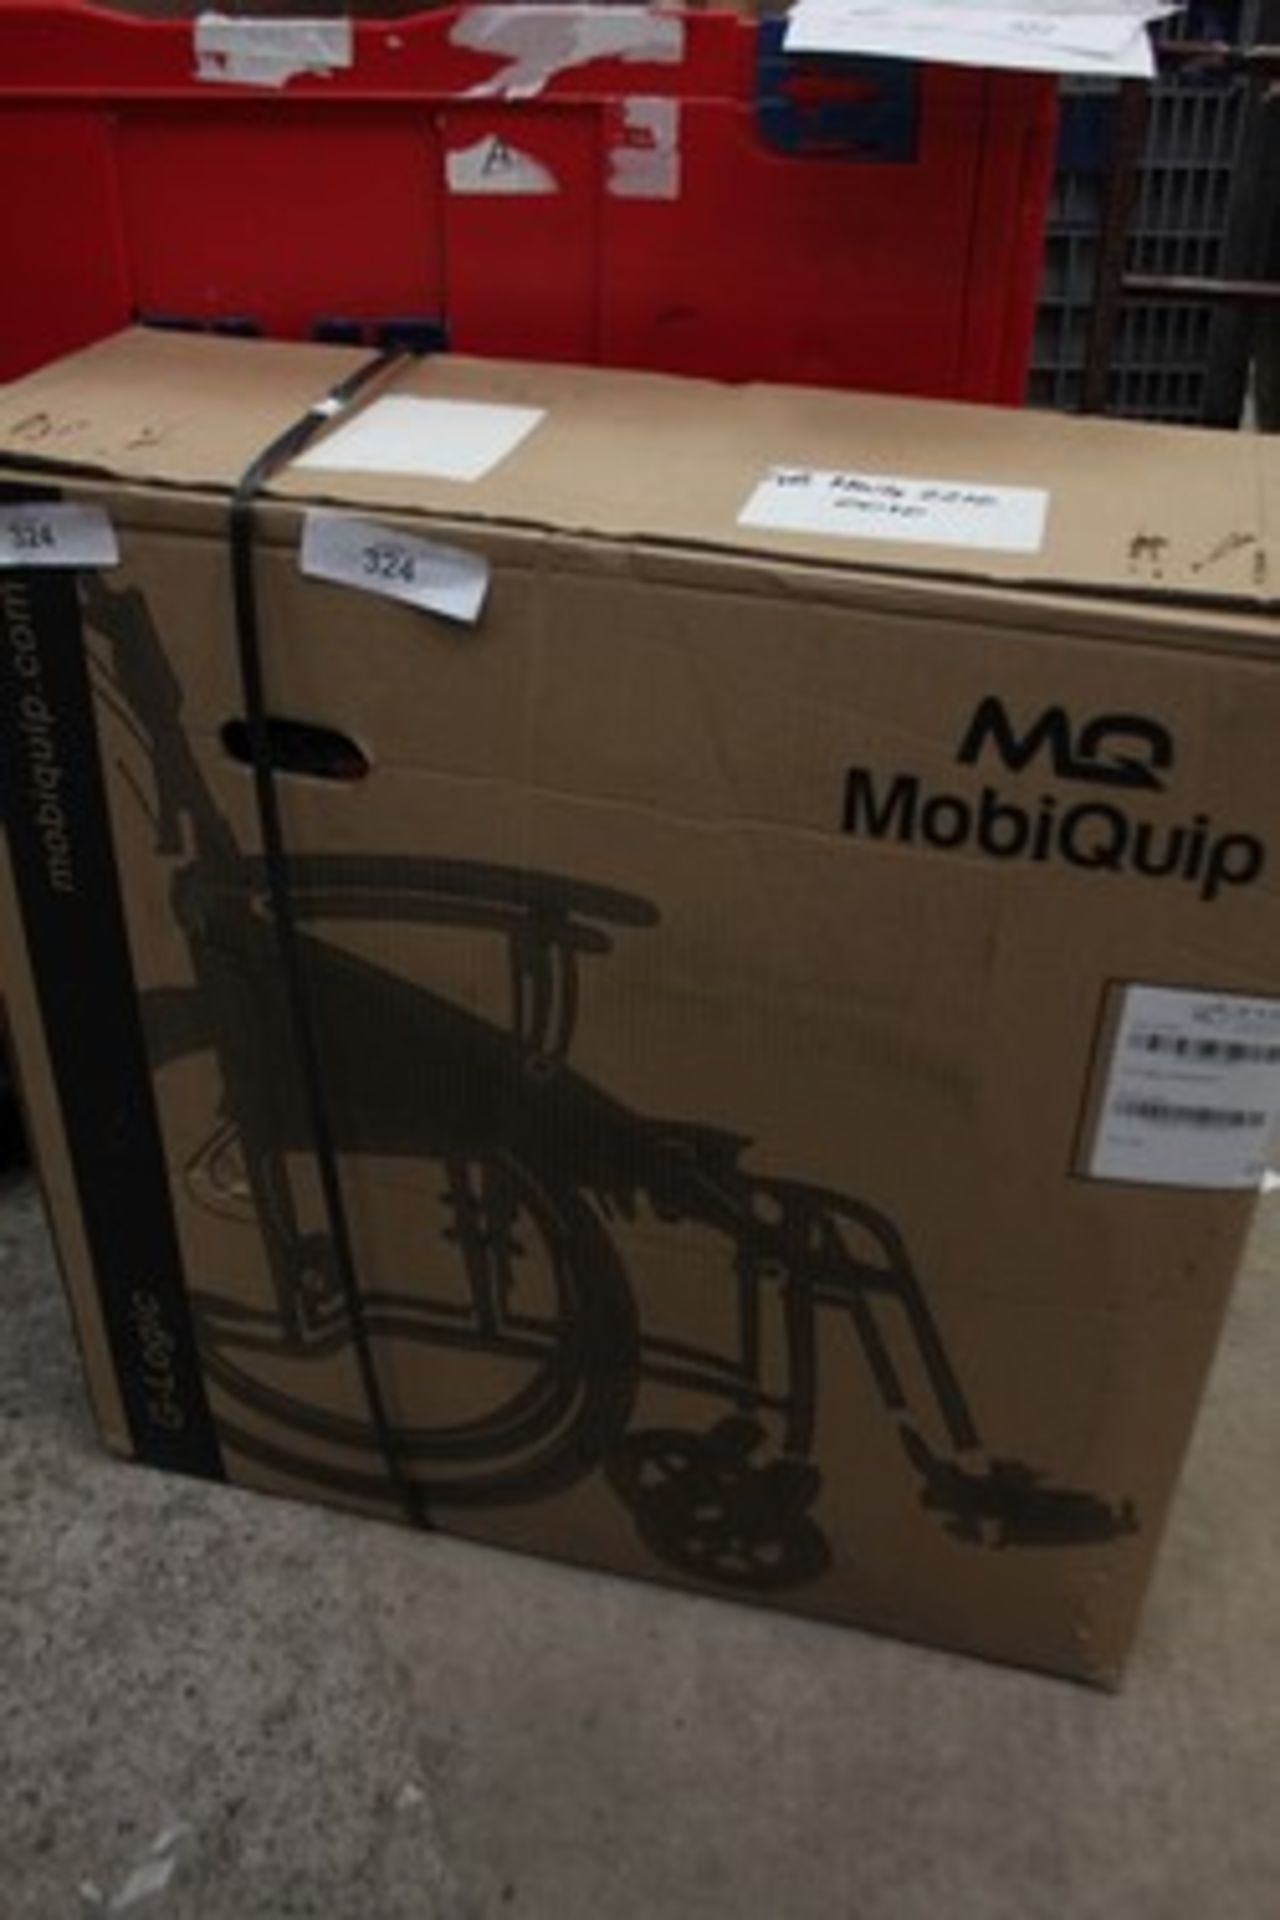 1 x Excel G-logic wheelchair, code: 3376HK2120MQ - sealed new in box (GS37)